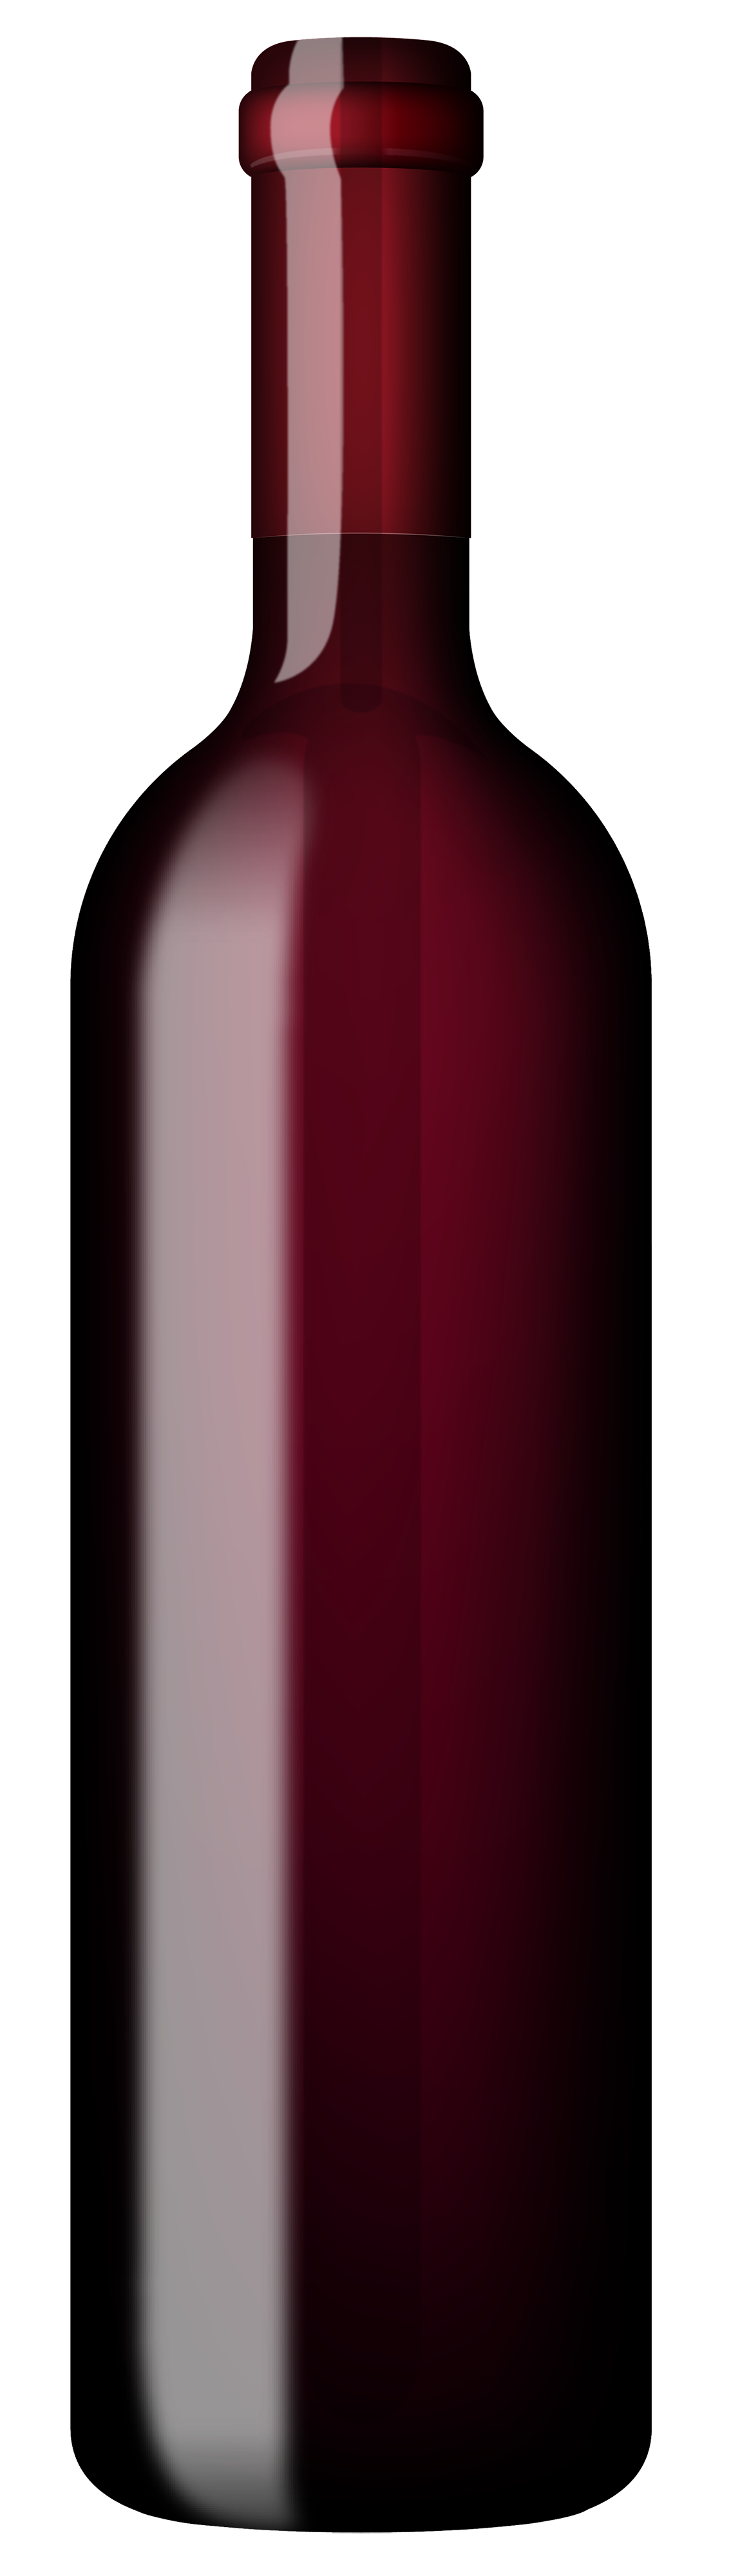 Wine Bottle Download Wine Of Wine Glasses Clipart